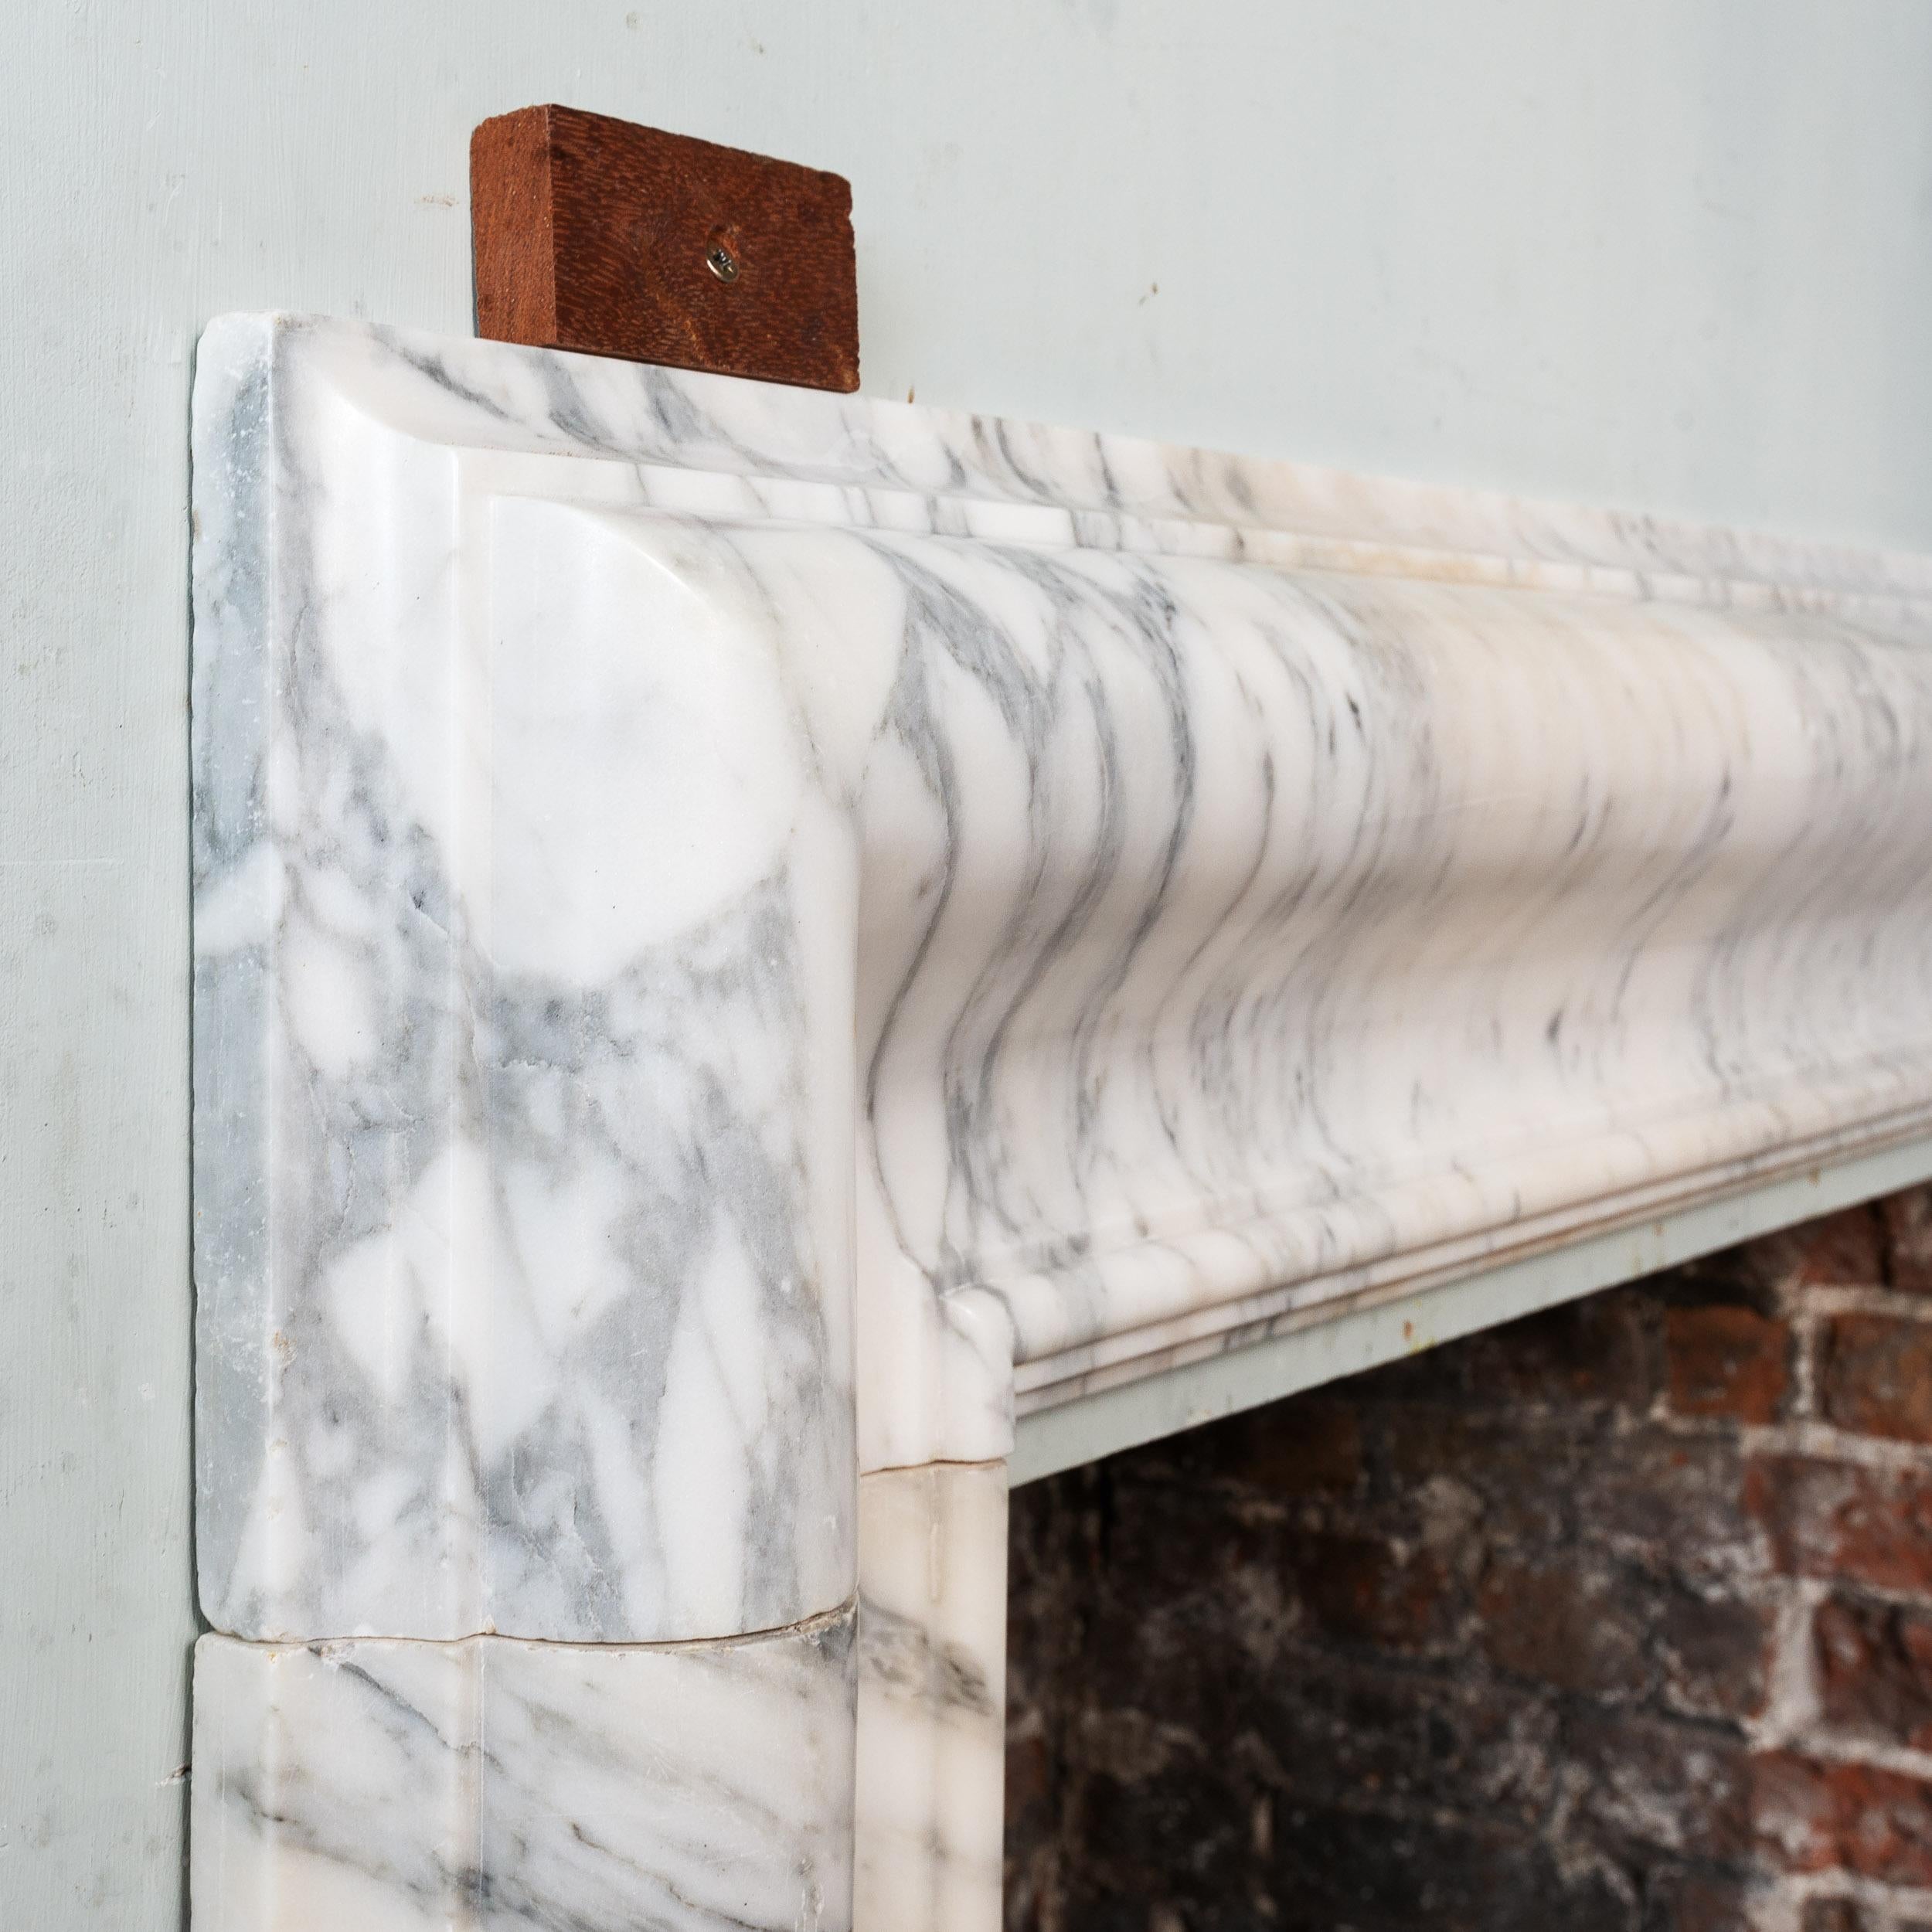 European Nineteenth Century Carrara Marble Bolection Surround For Sale